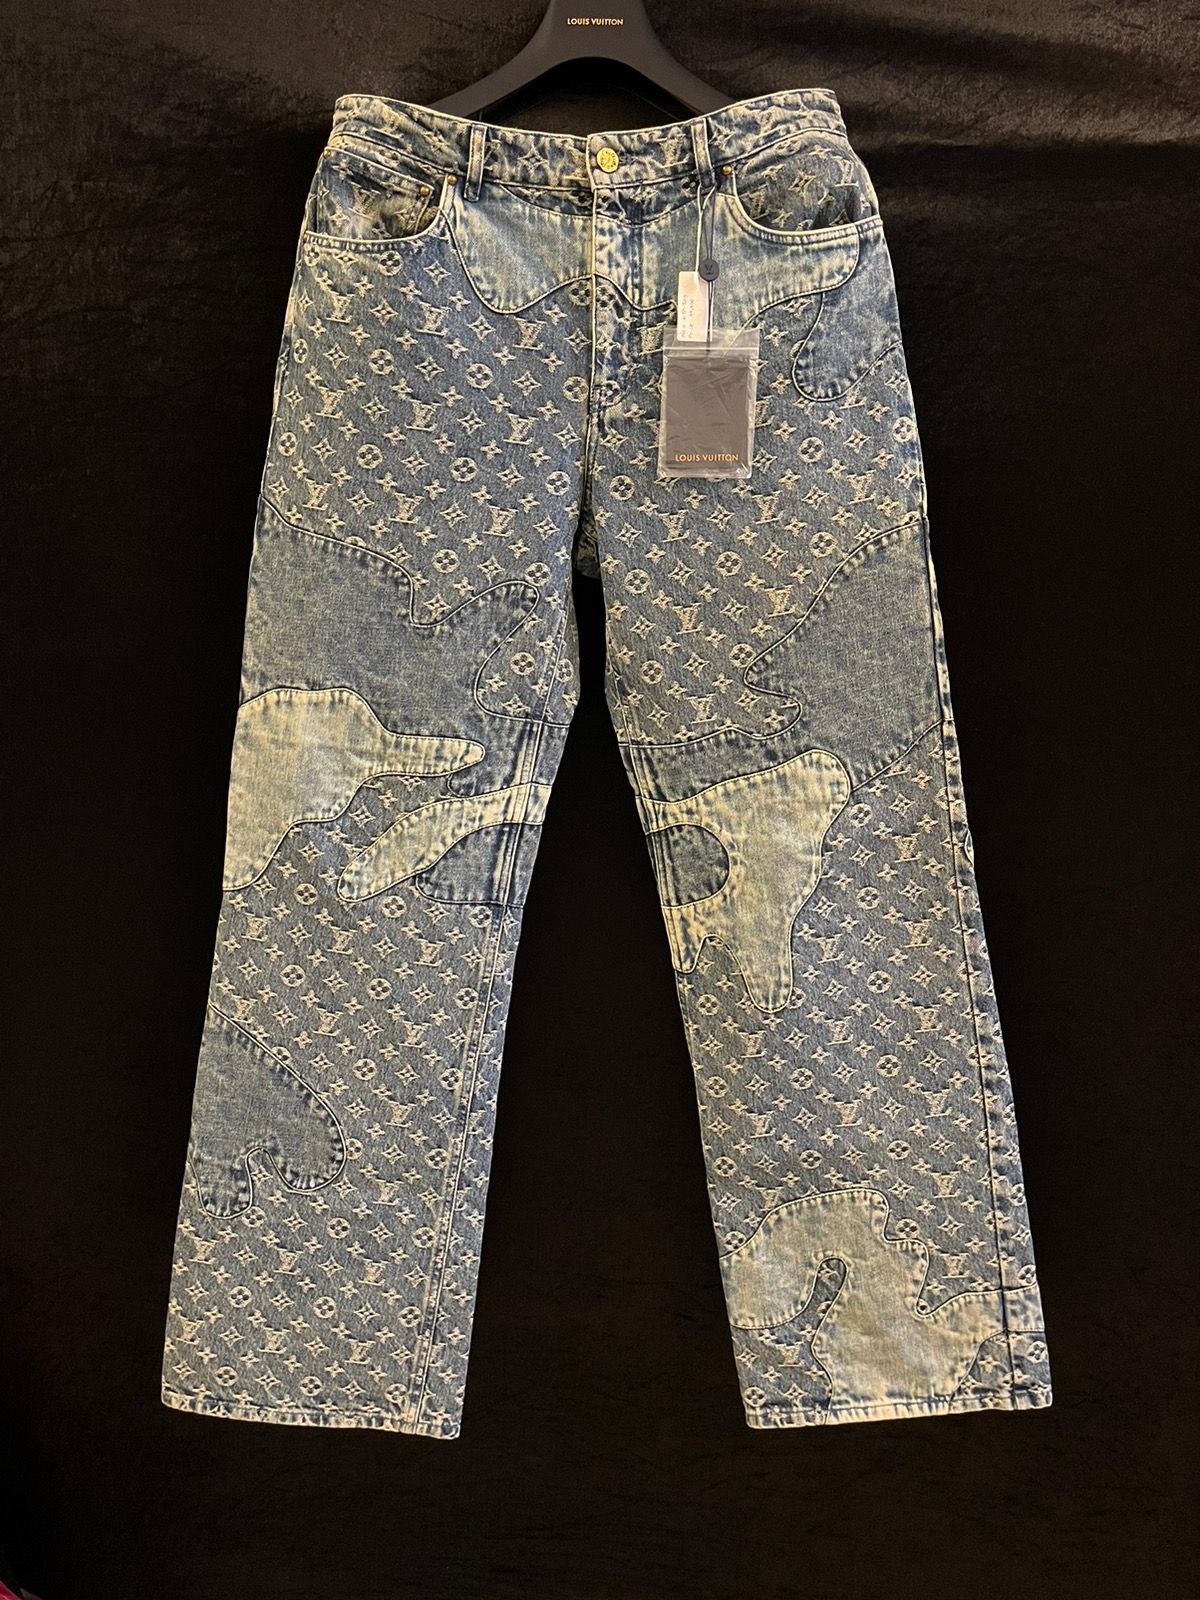 Denim Jeans Observer on X:  Louis Vuitton 2022  Resort Cruise Mens Collection #LouisVuitton #VirgilAbloh #Nigo #patchwork # denim #jeans #denimondenim #drip #patches #corduroy #denimjacket  #jeanjacket #monogram #duffel #handbag